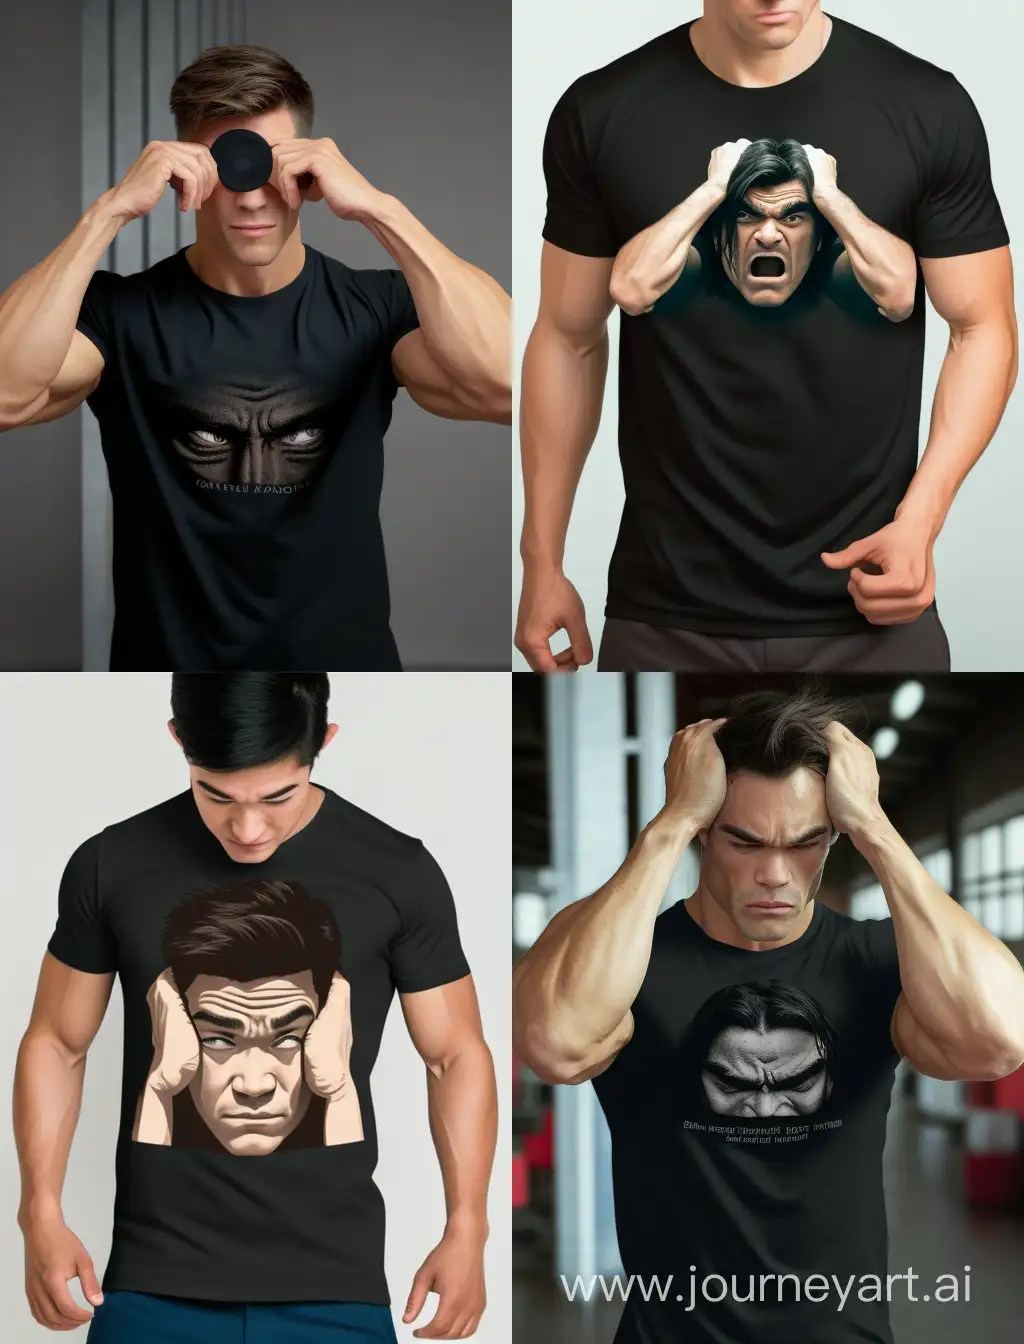 Casual-Asian-Man-Doing-PushUps-in-Stylish-Black-TShirt